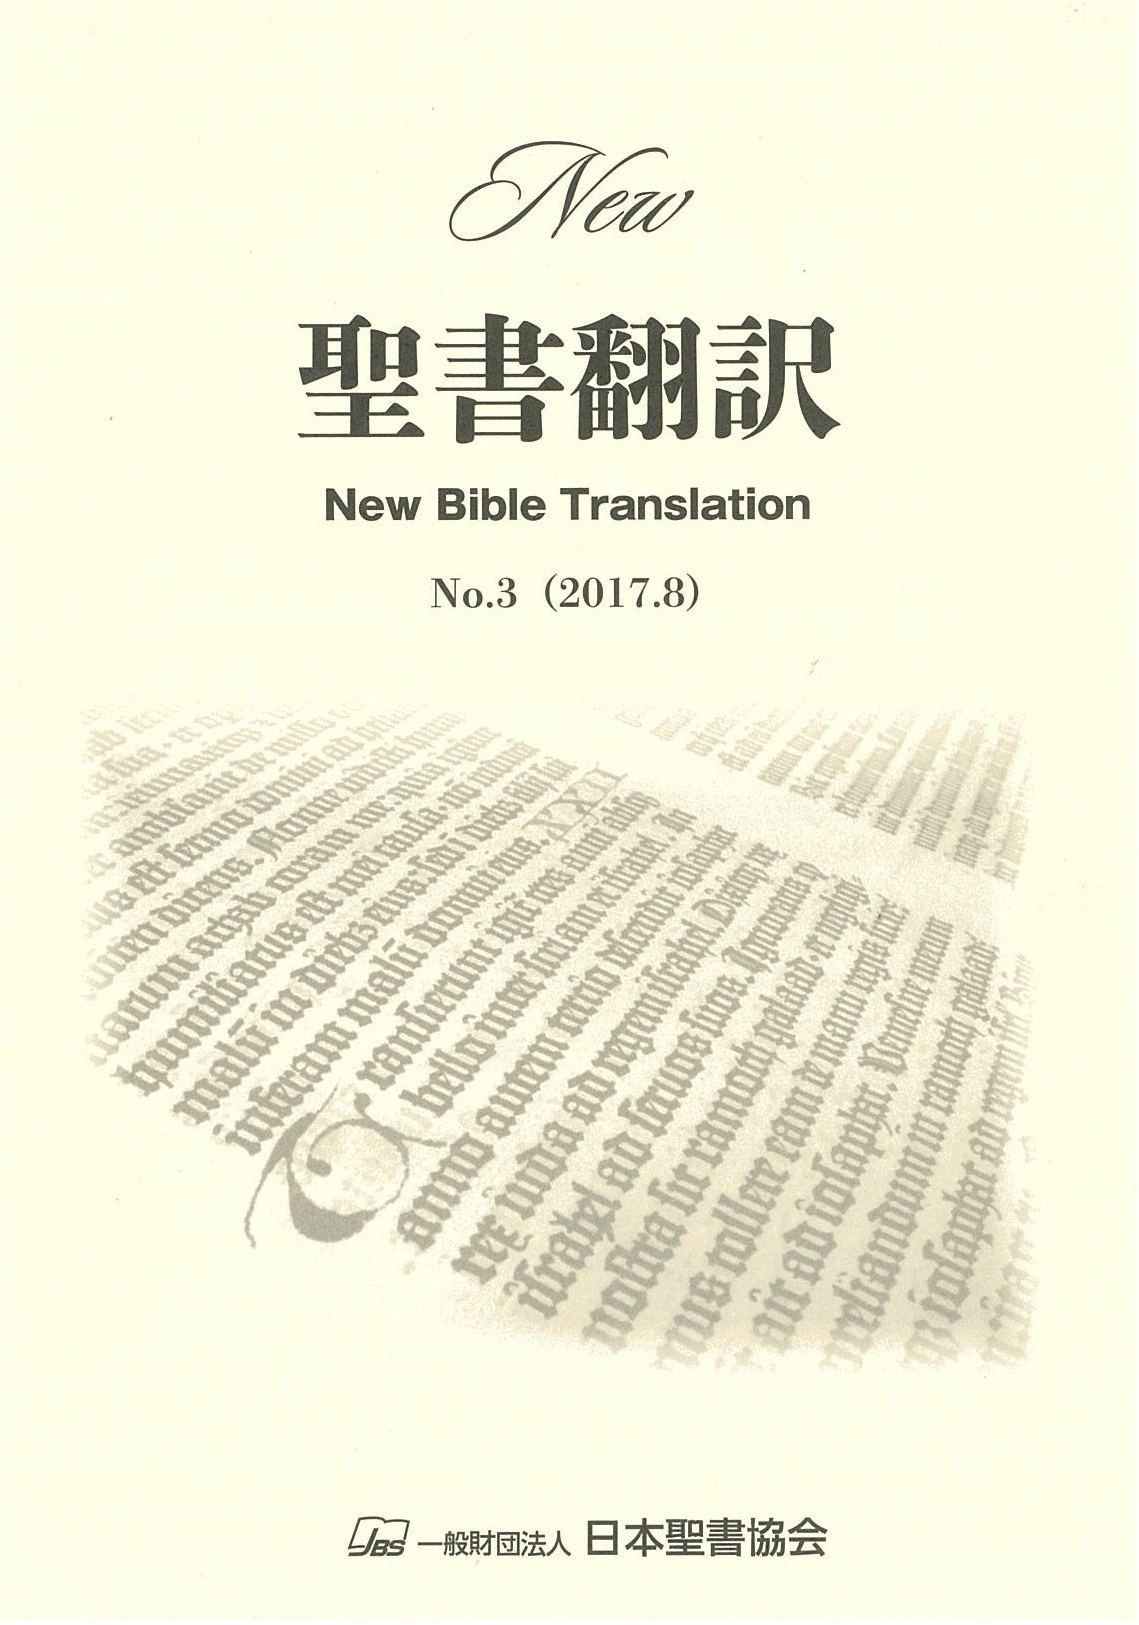 New聖書翻訳　No.3の商品画像